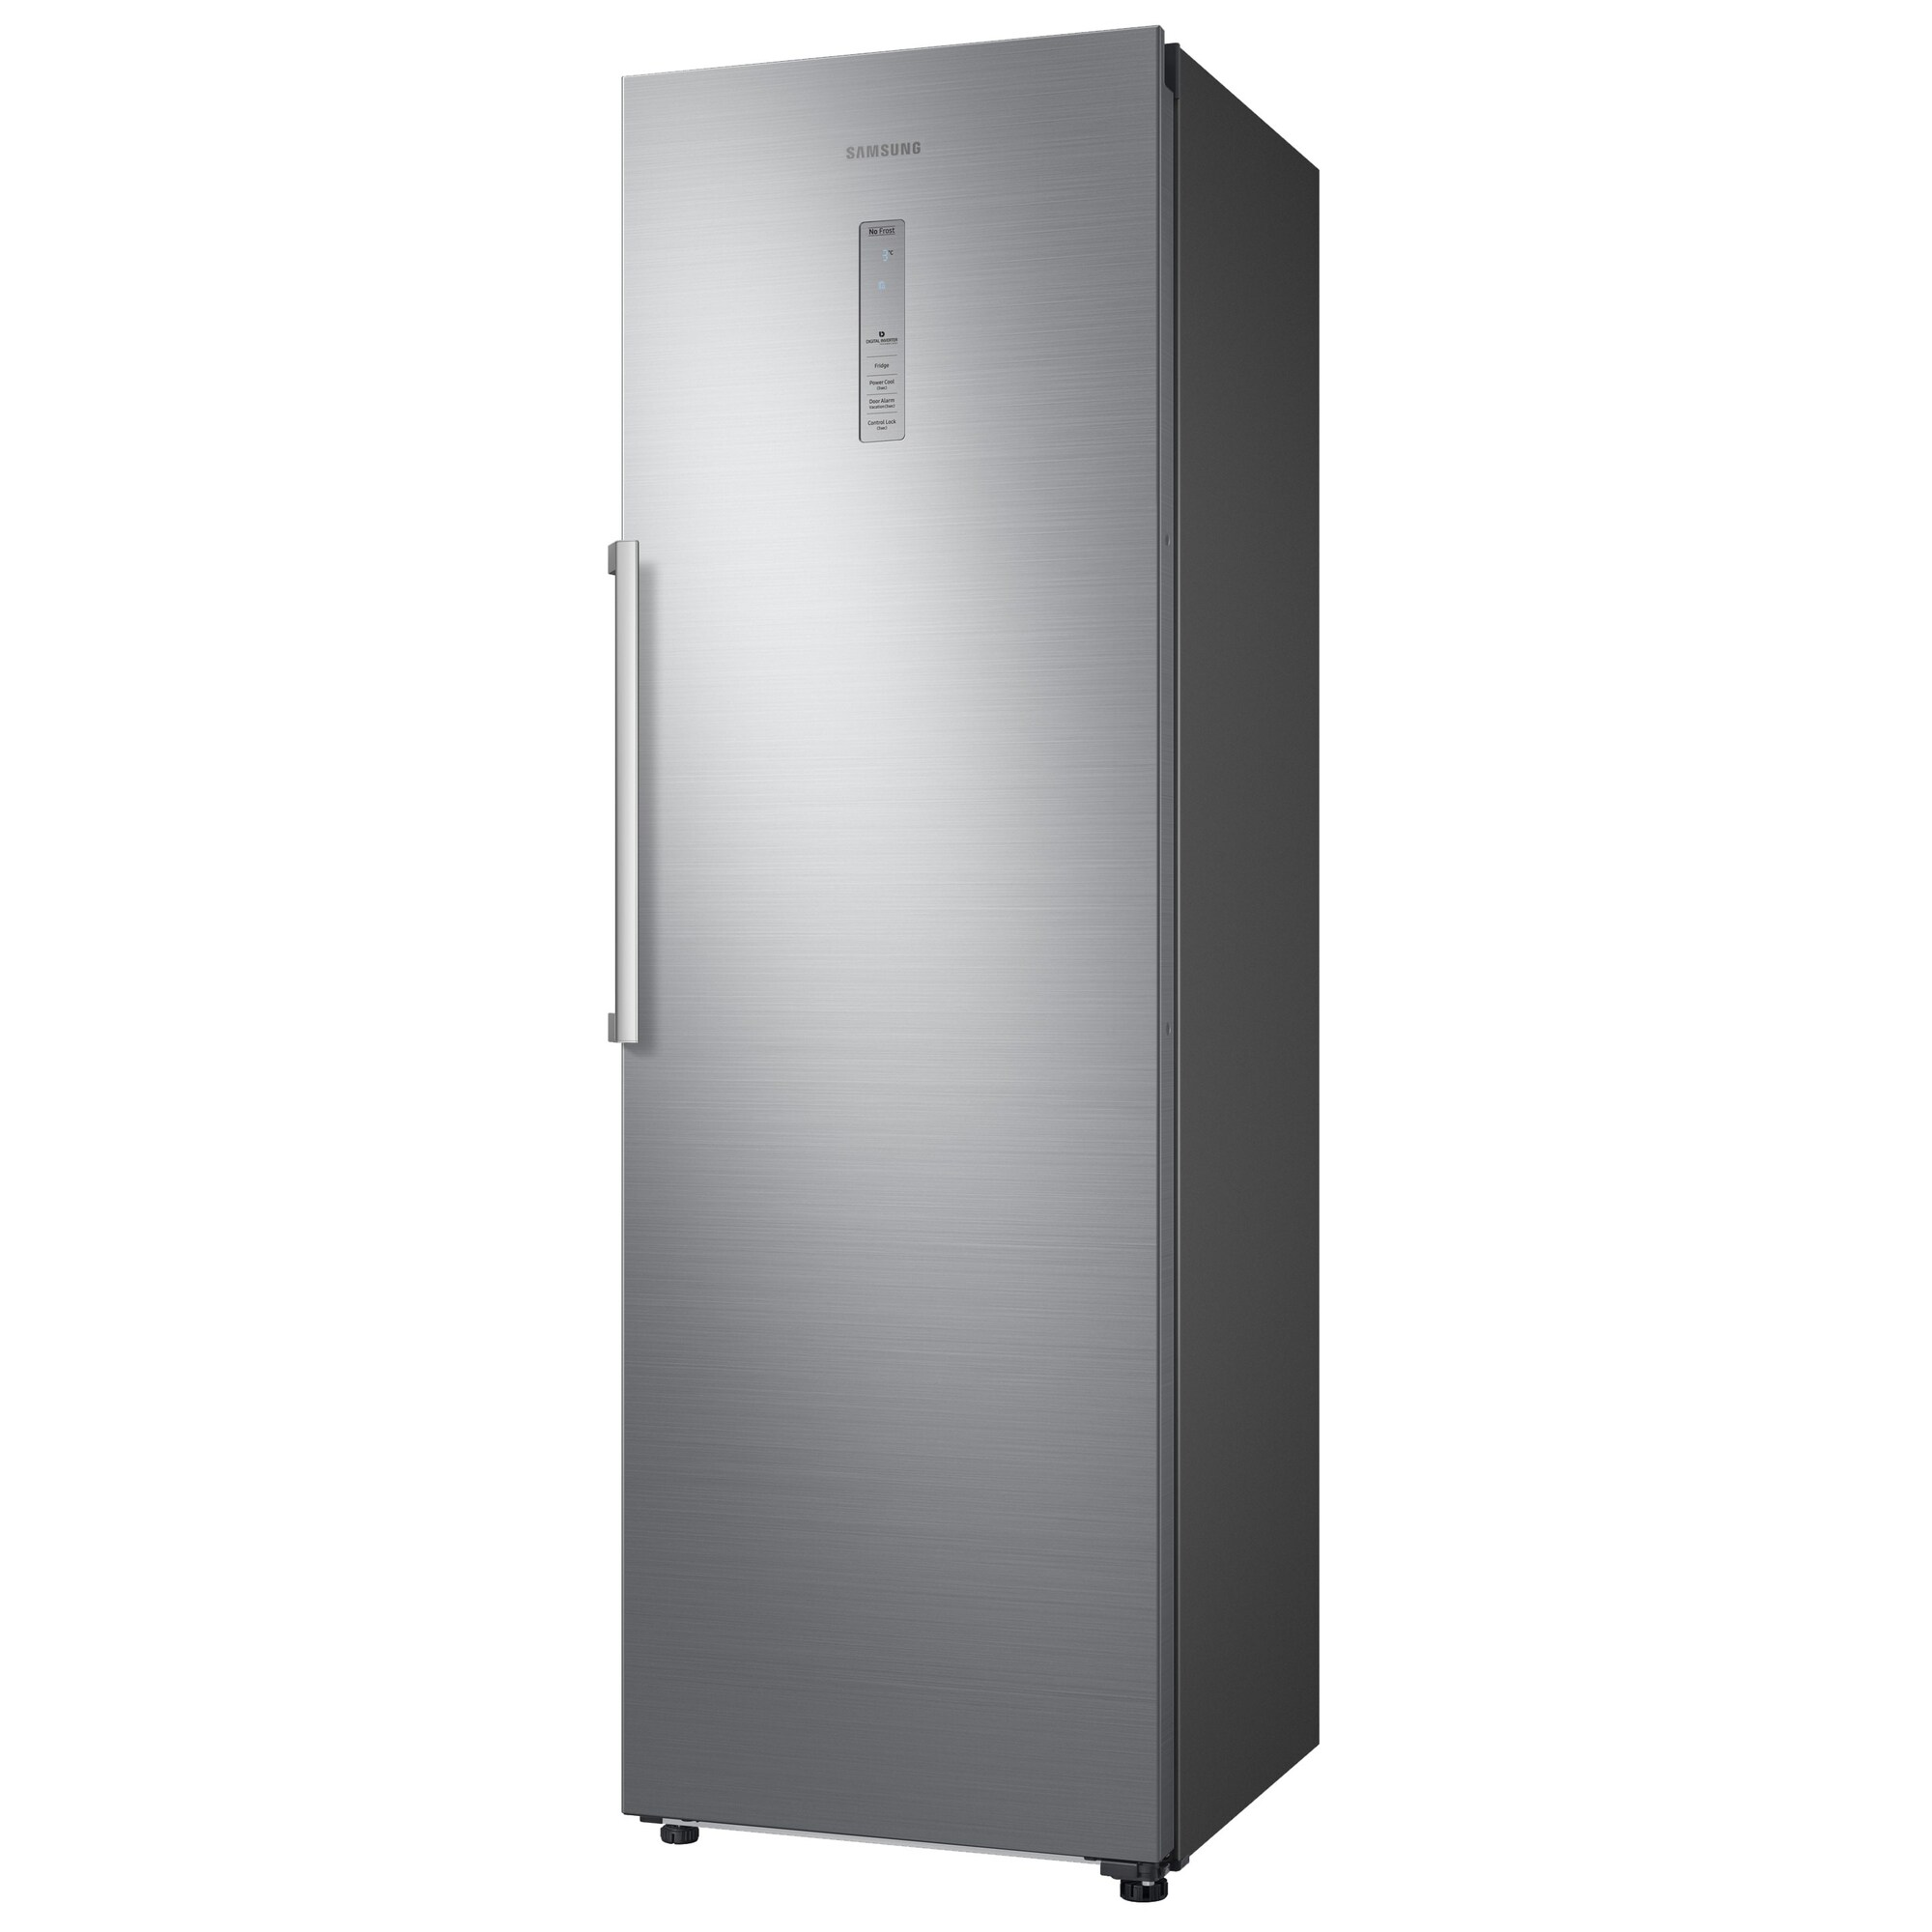 Samsung jääkaappi RR40M71657F/EE (teräs) - Gigantti verkkokauppa